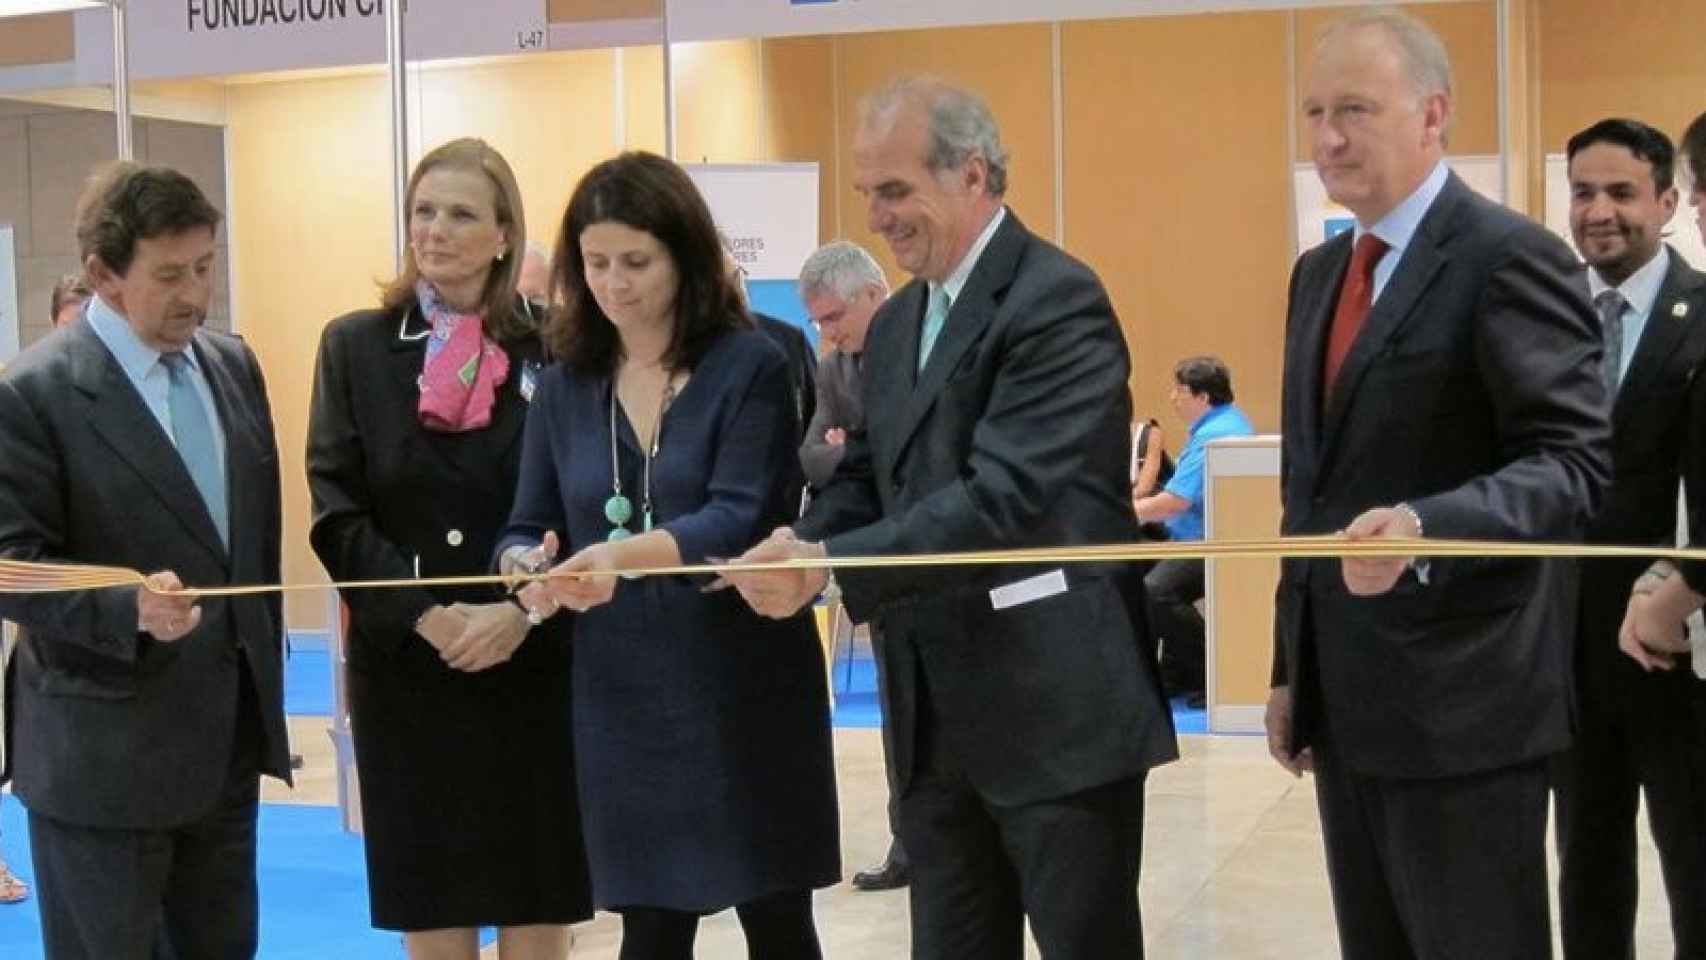 Núria Betriu (centro) en la inauguración de una feria como consejera delegada de Acció junto al presidente de Foment del Treball, Joaquim Gay de Montellà.